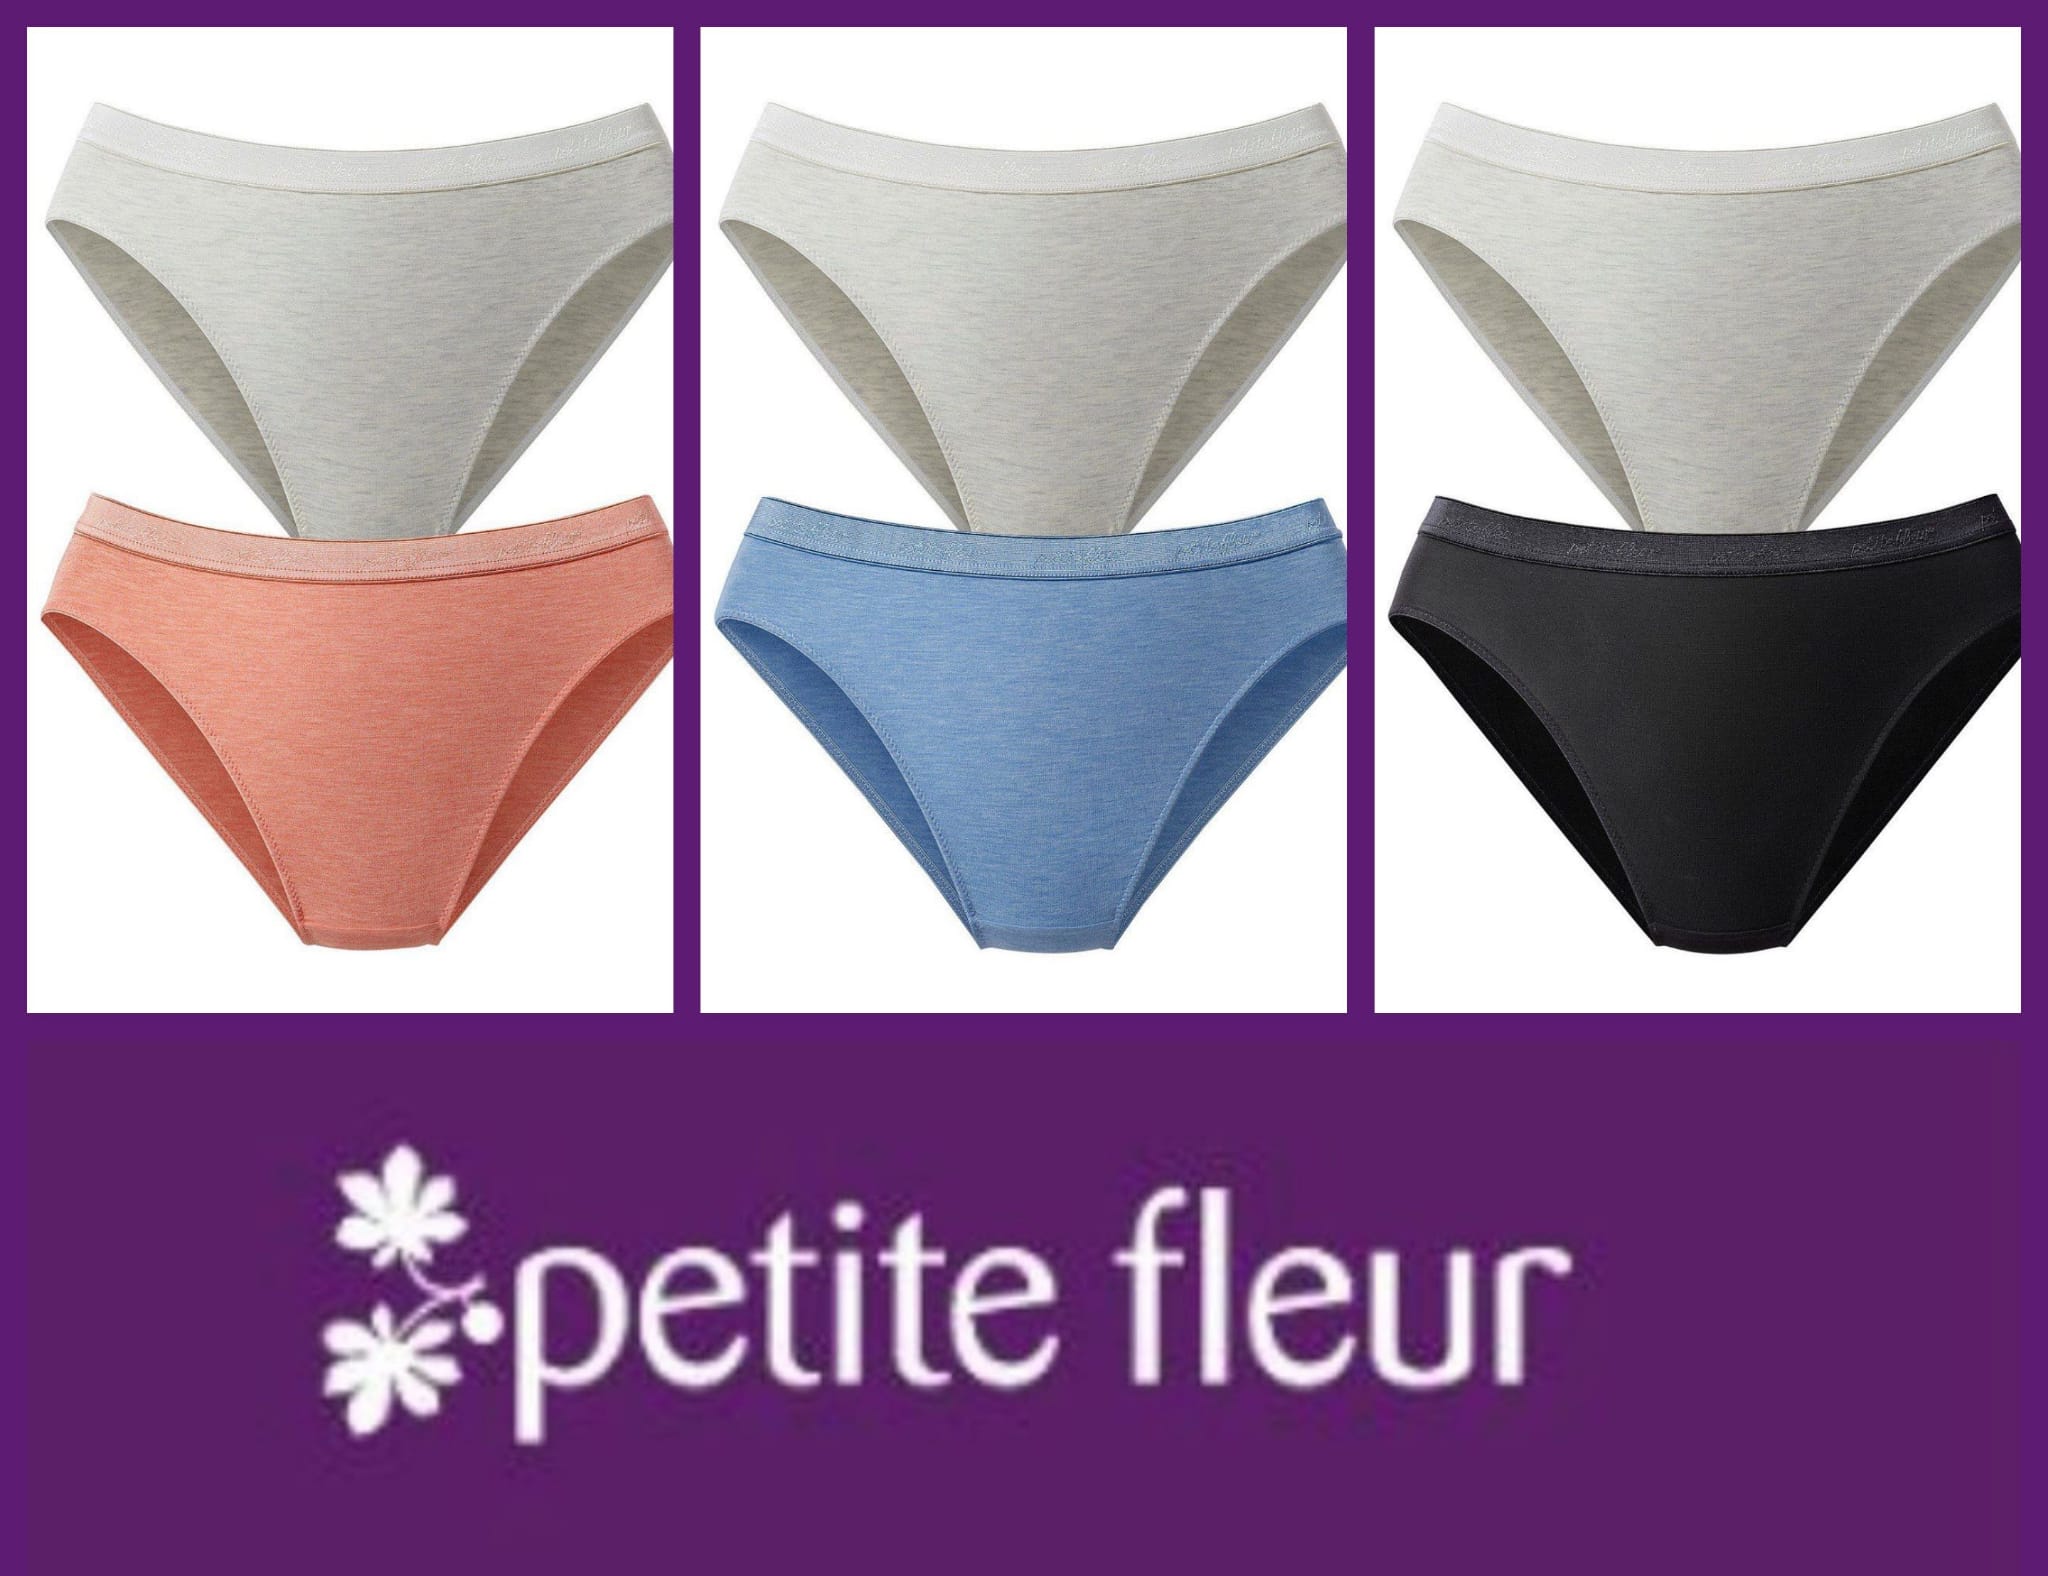 PETITE FLEUR women's panties